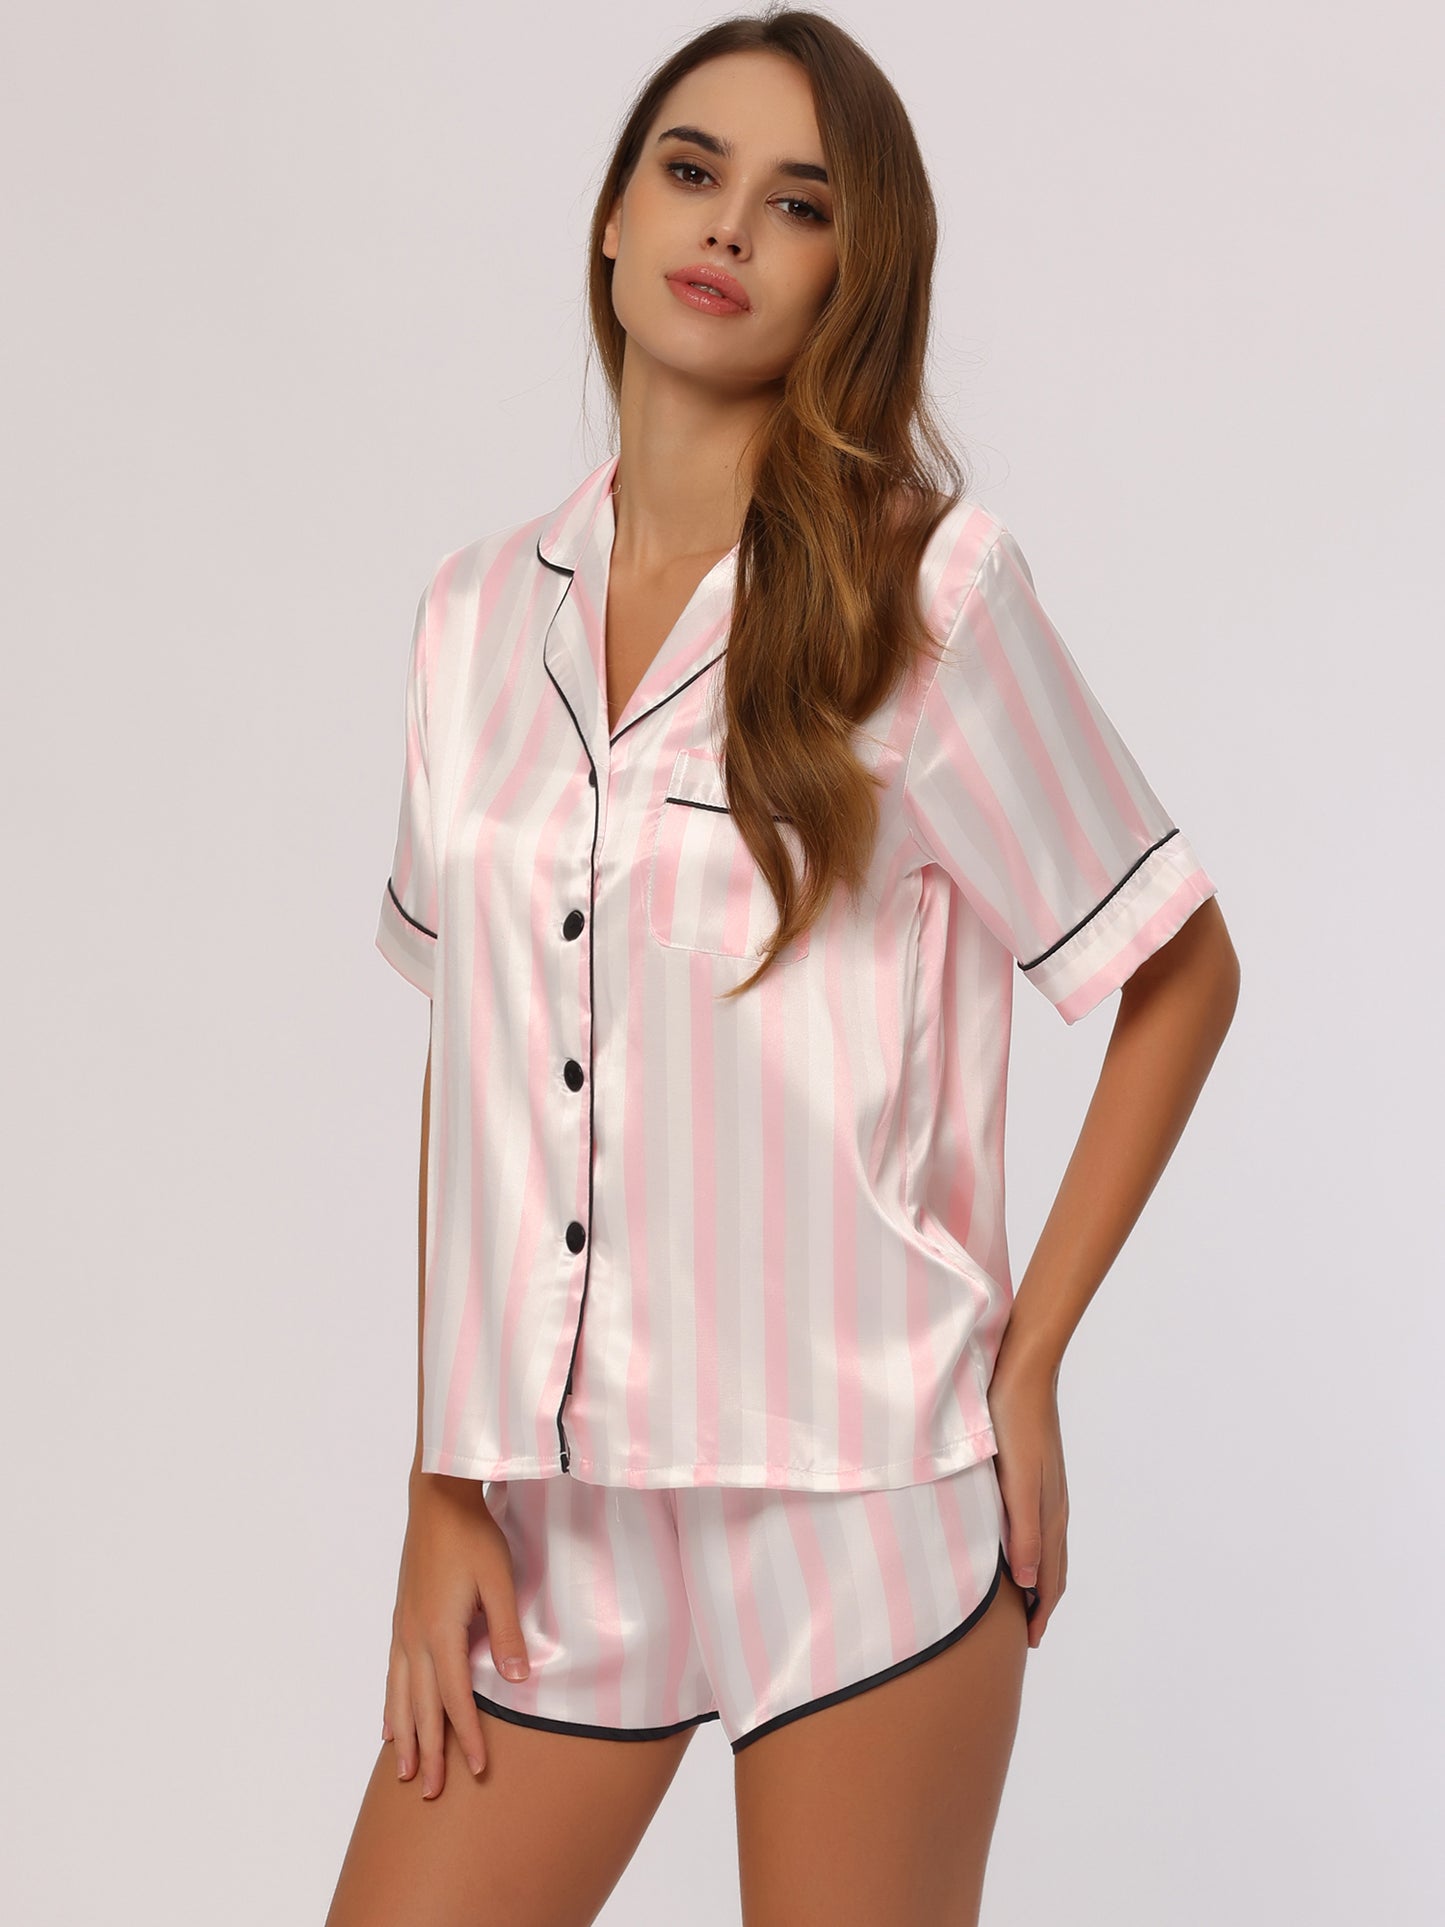 cheibear Satin 2pcs Lounge Sleepwear T-Shirt and Shorts Polka Dots Pajama Sets Pink-White